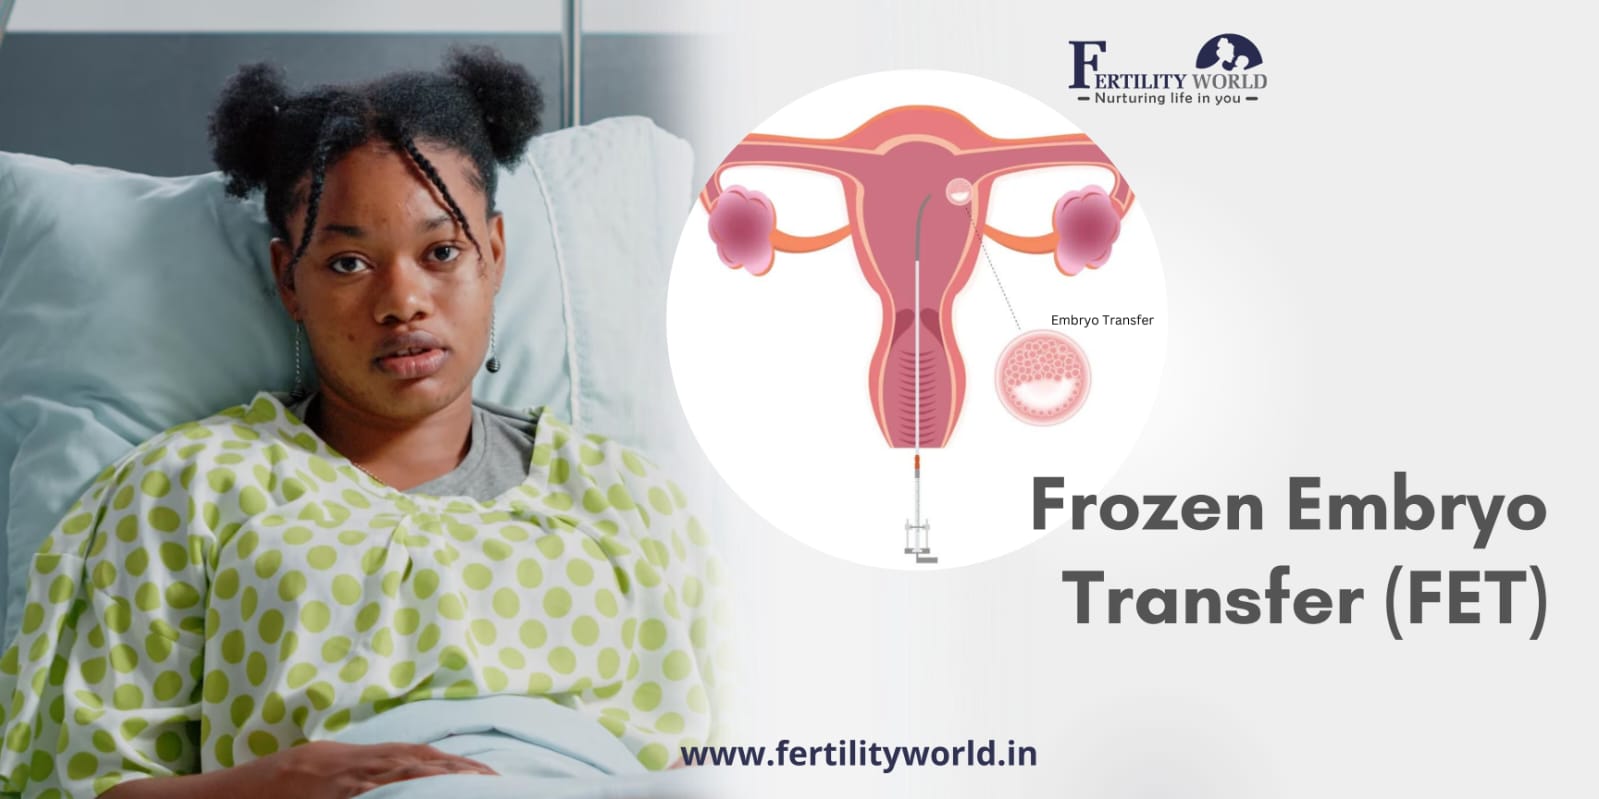 Cost of Frozen Embryo Transfer (FET)